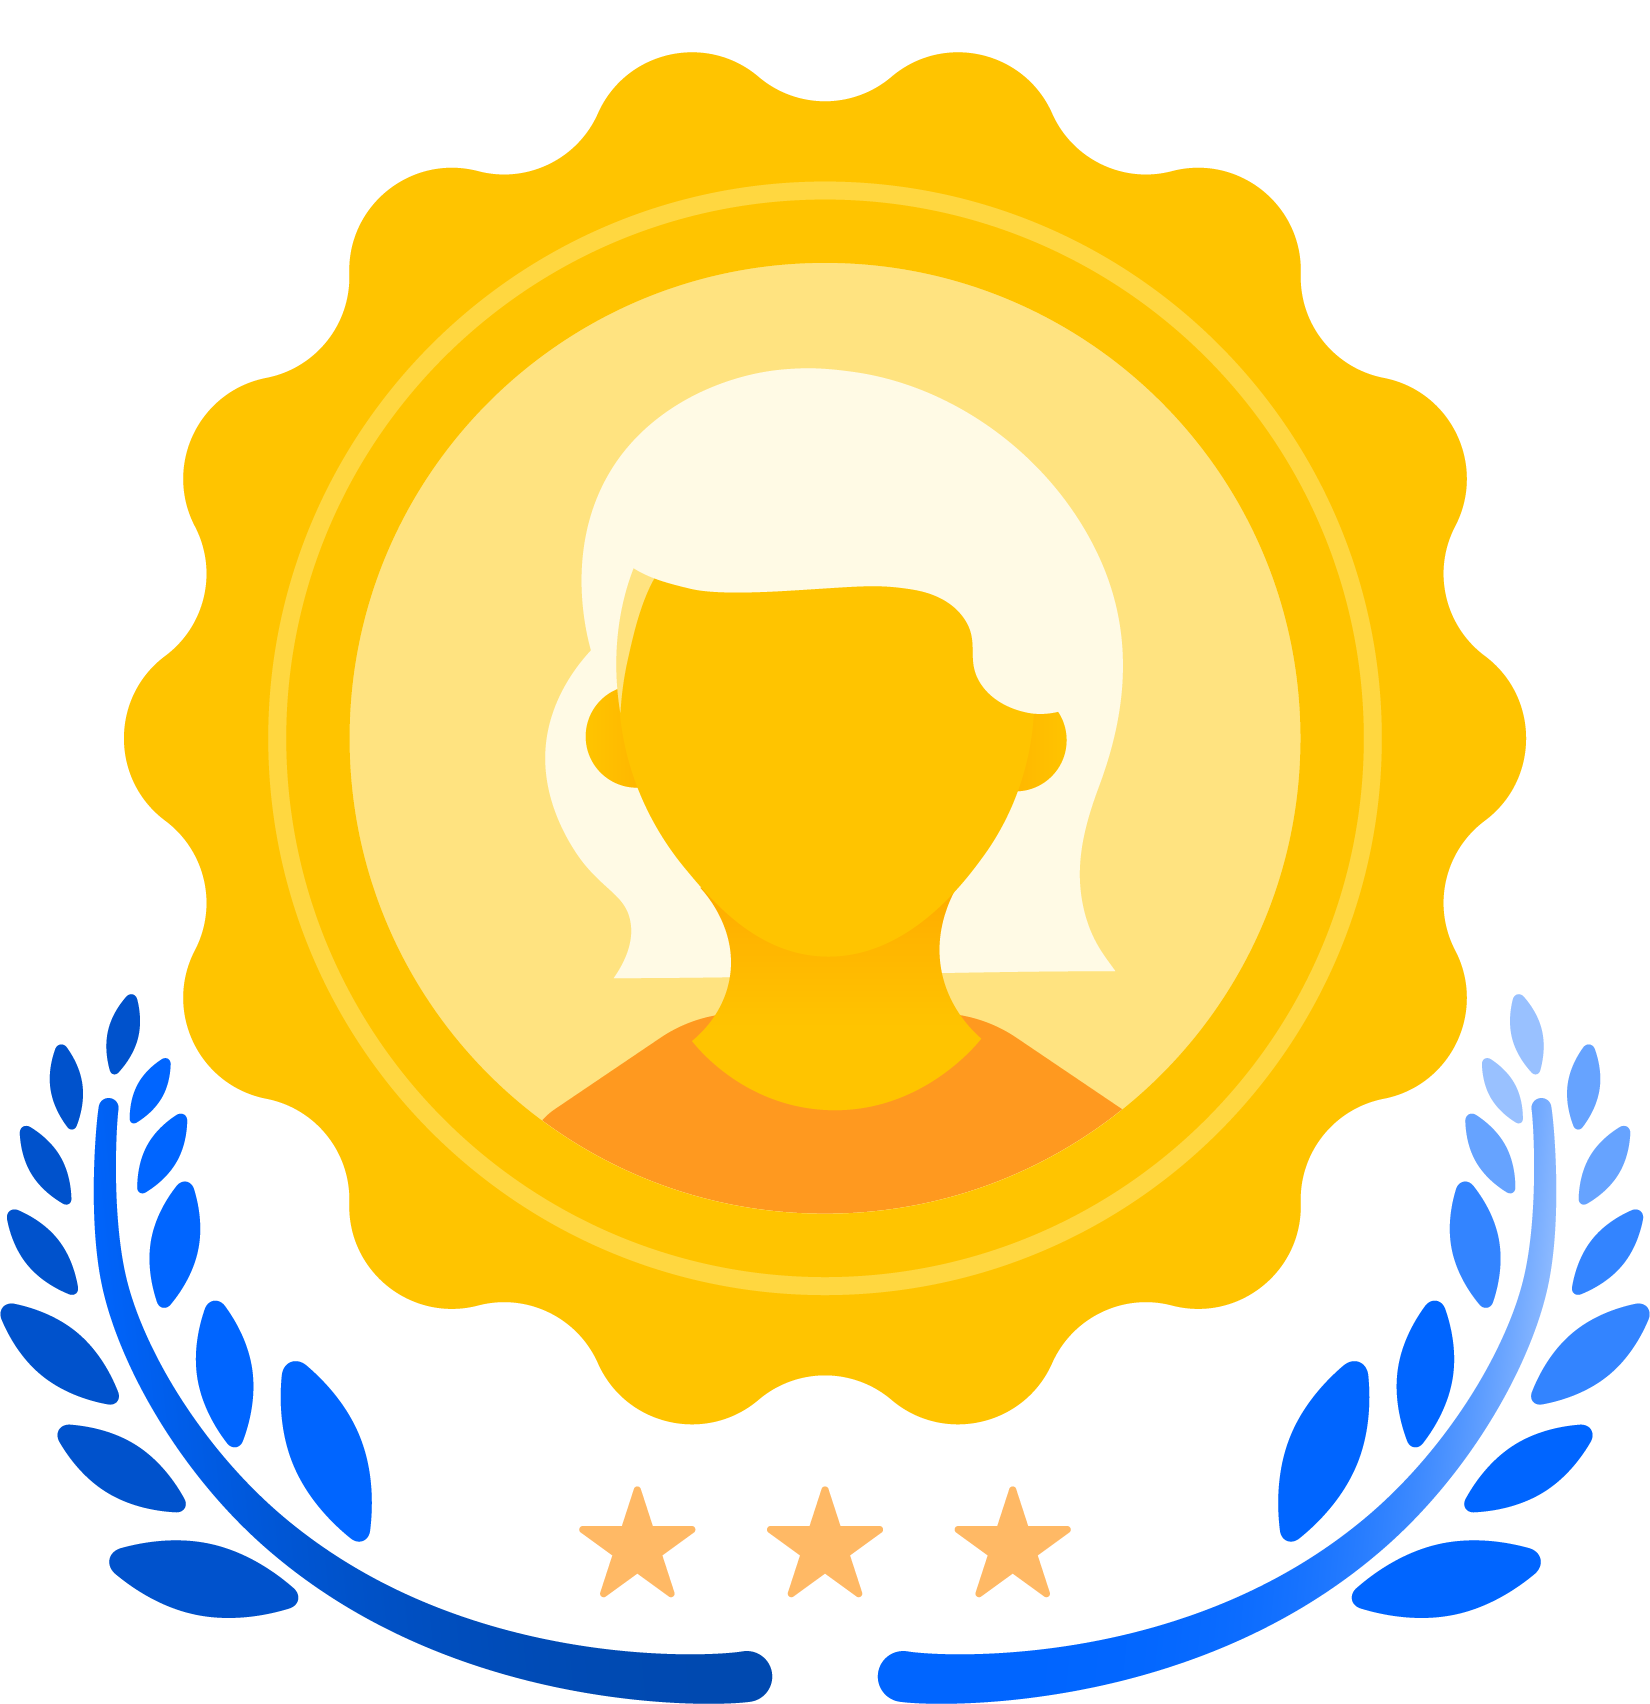 Medalhão